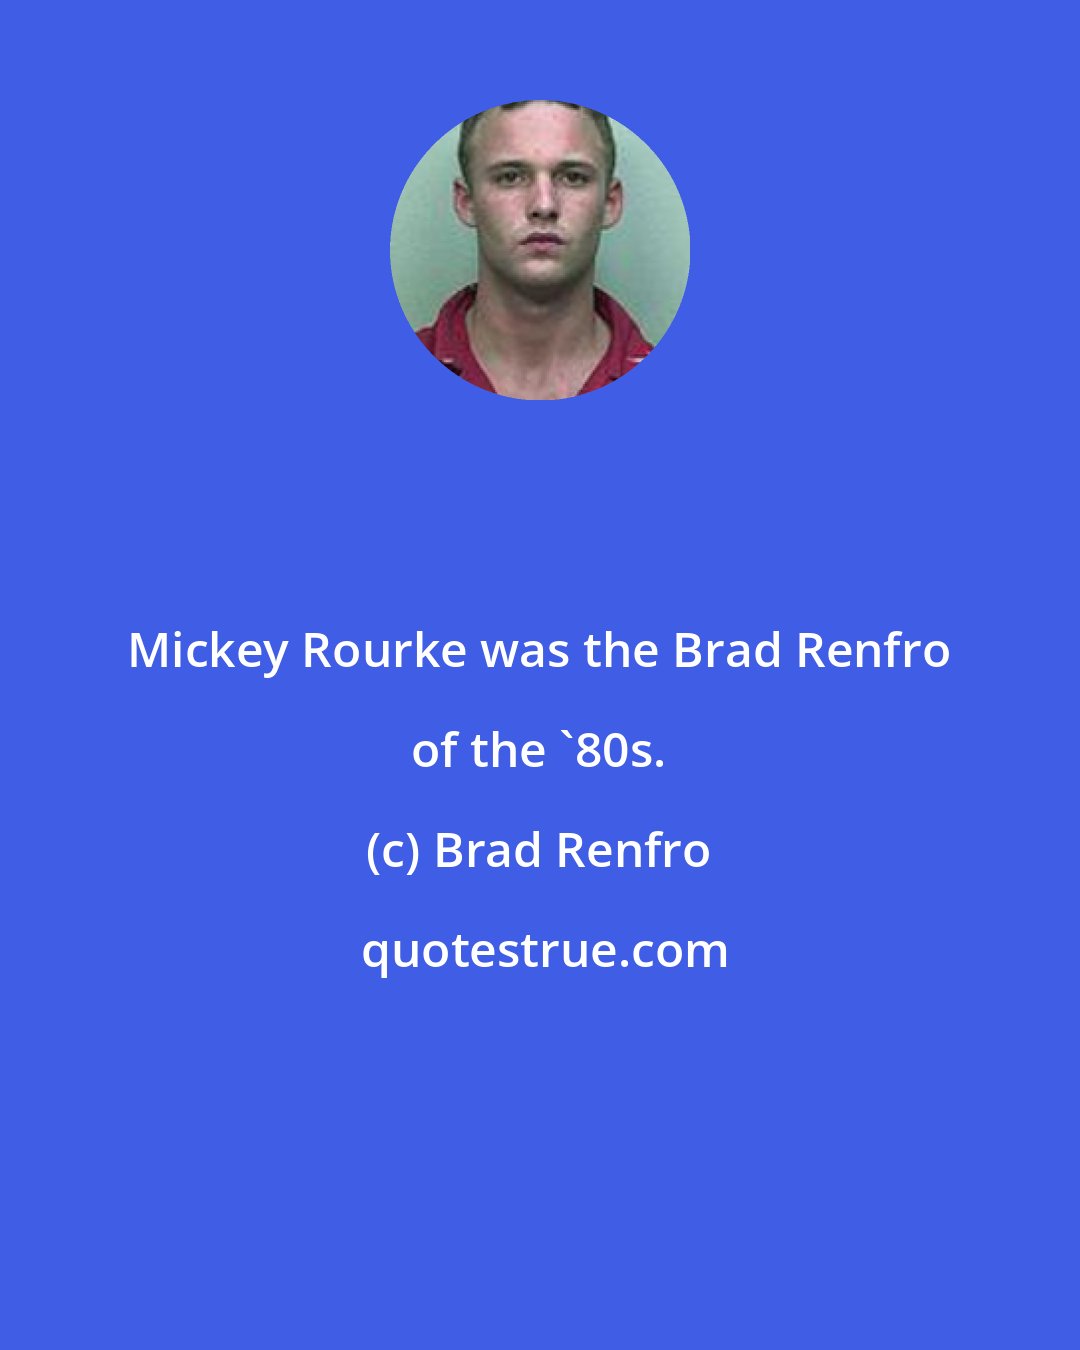 Brad Renfro: Mickey Rourke was the Brad Renfro of the '80s.